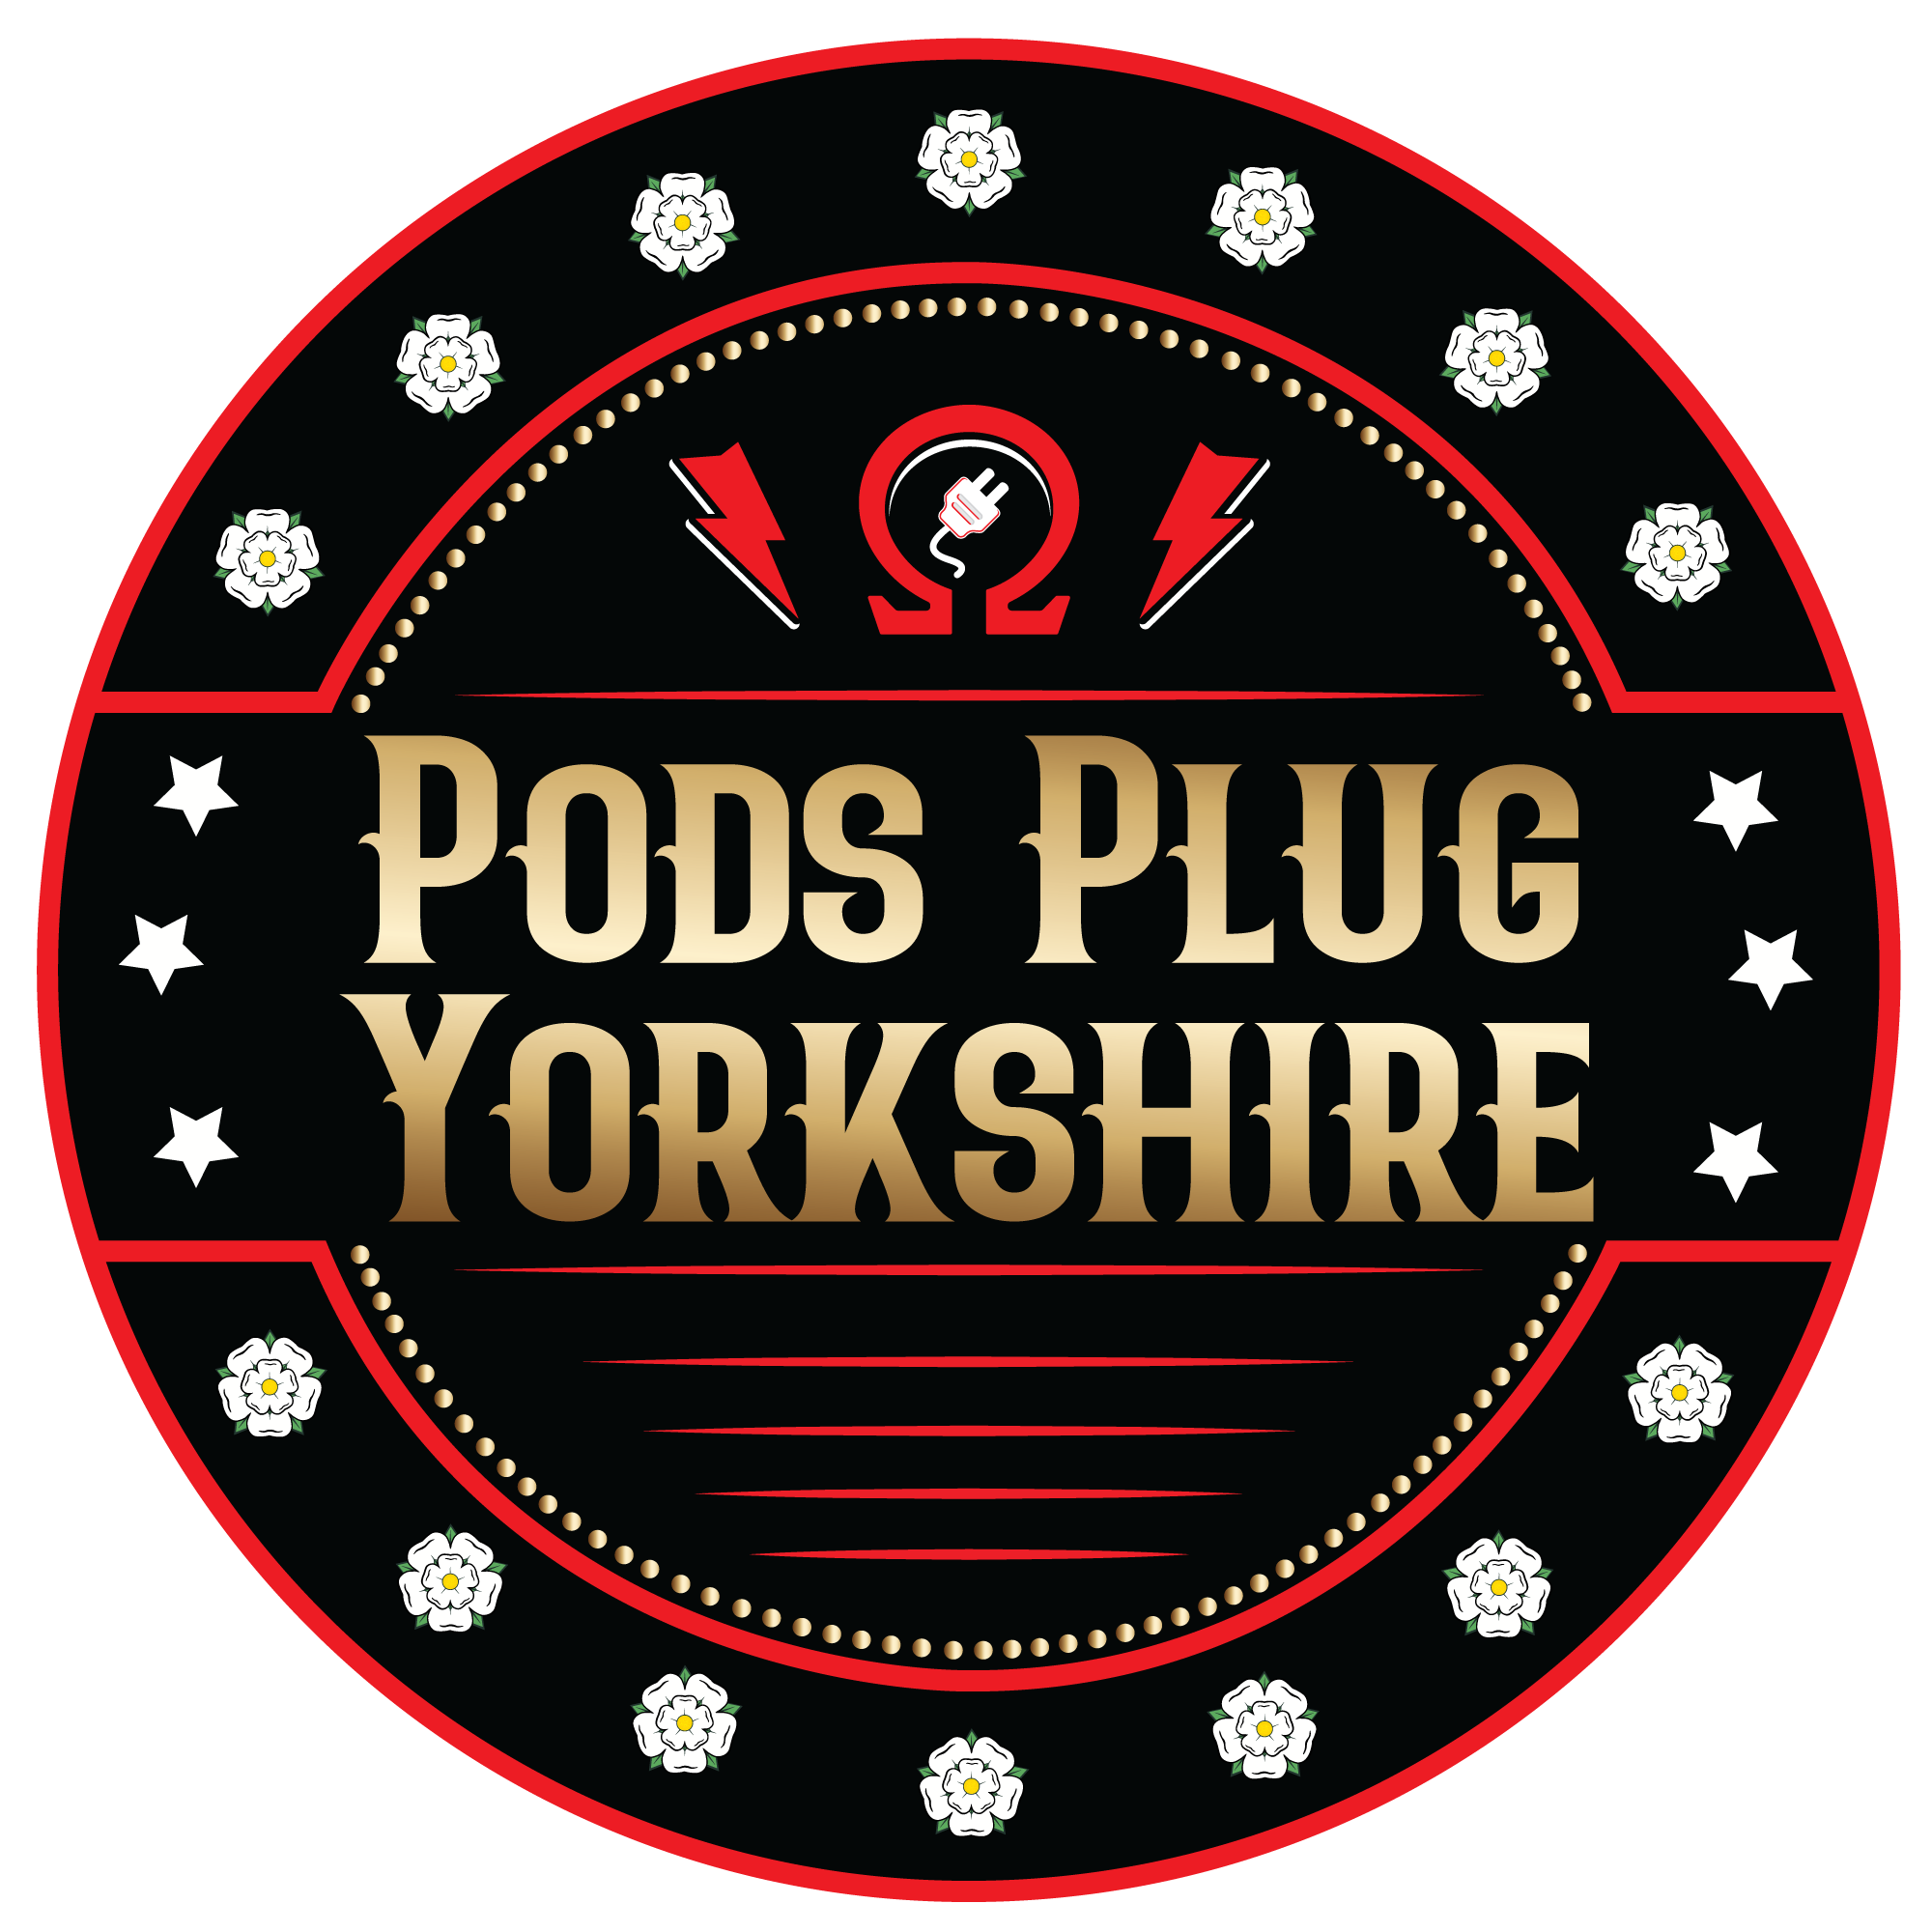 Pods Plug Yorkshire– PodsPlugYorkshire